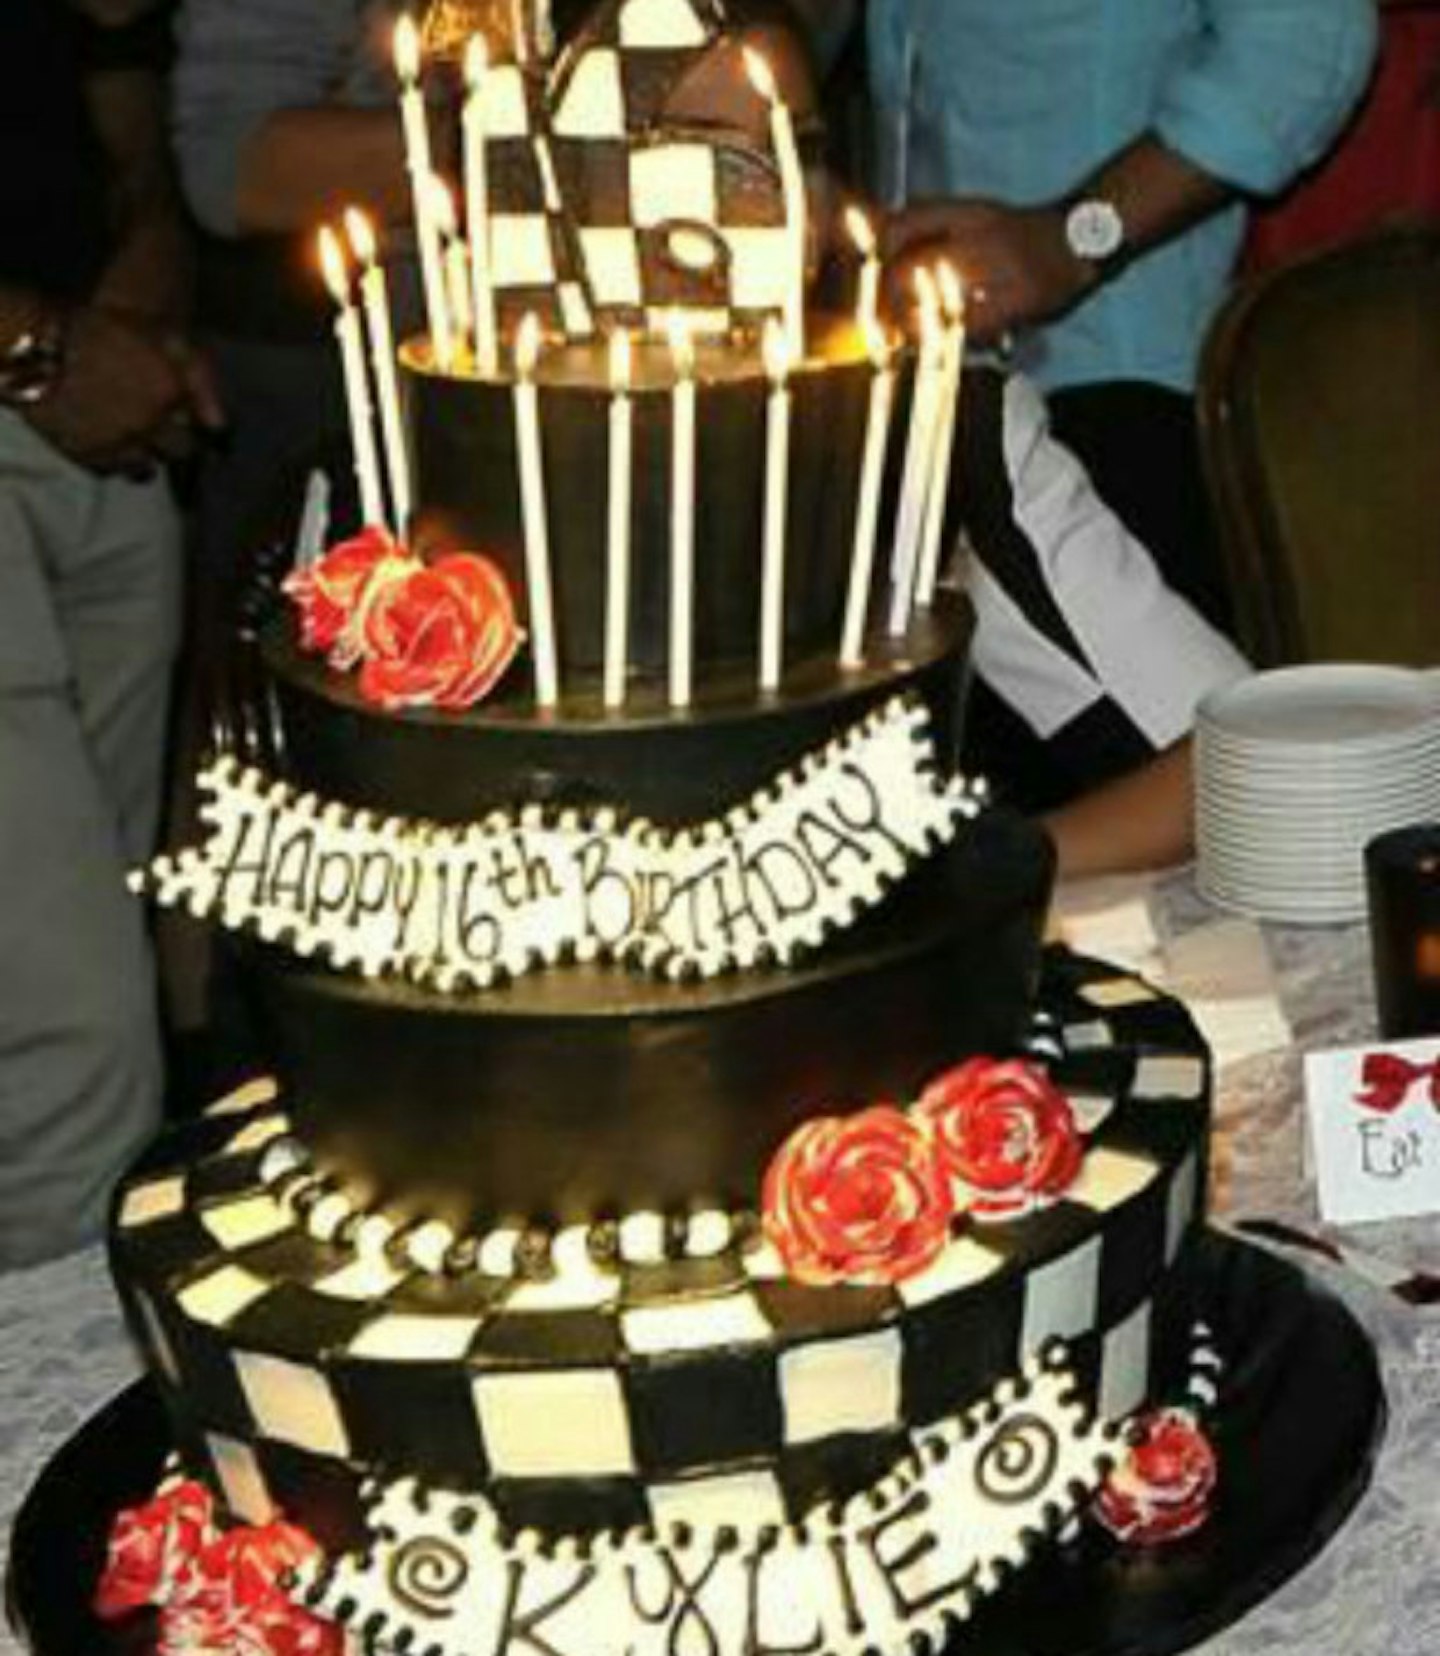 KYLIE JENNER'S 16 BIRTHDAY CAKE